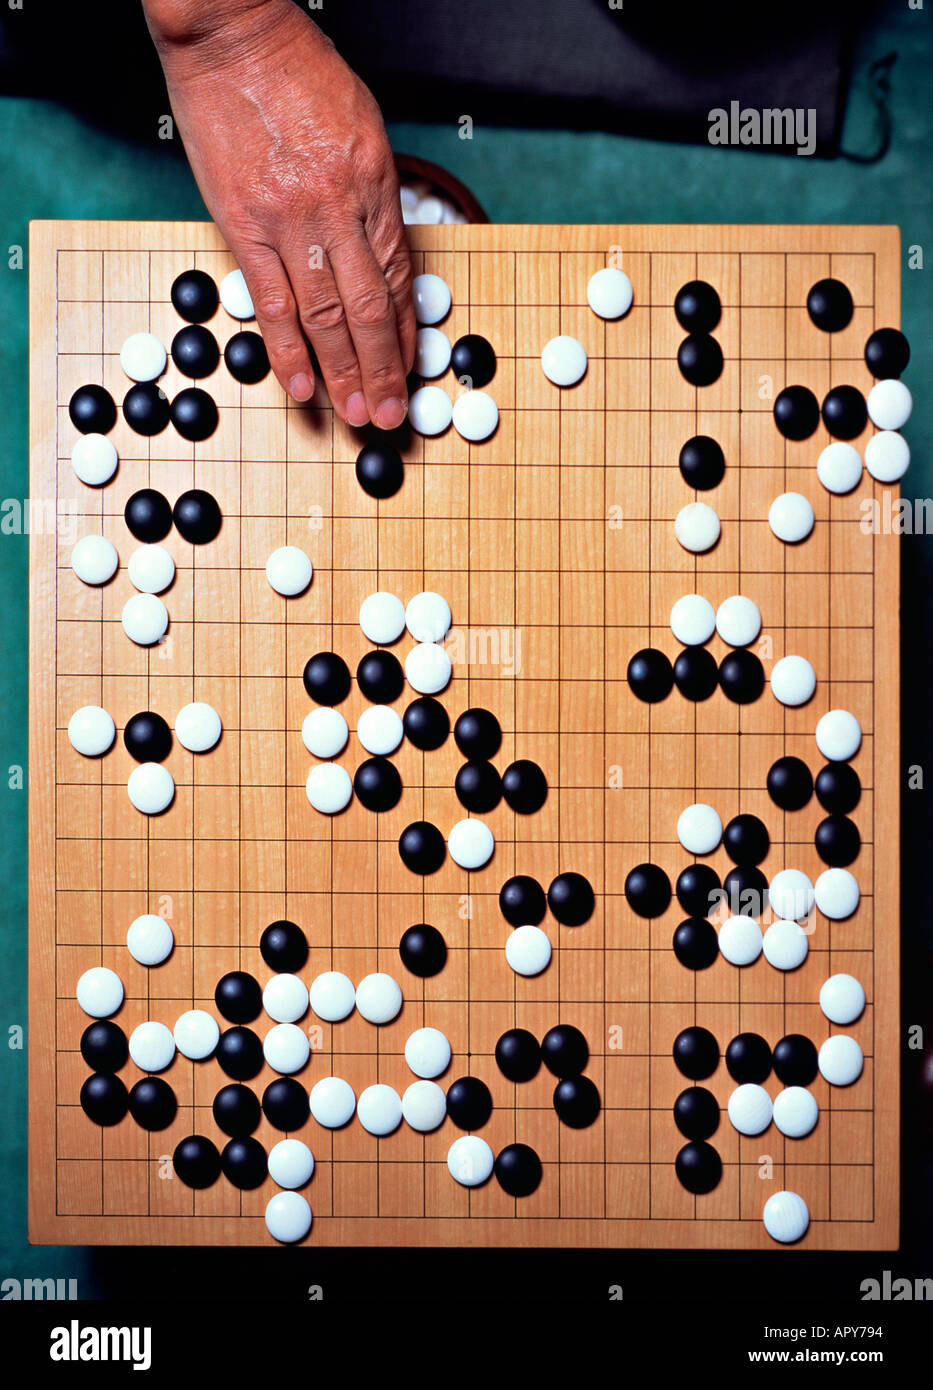 Orientalische Brettspiel Go, Japan Stockfotografie - Alamy